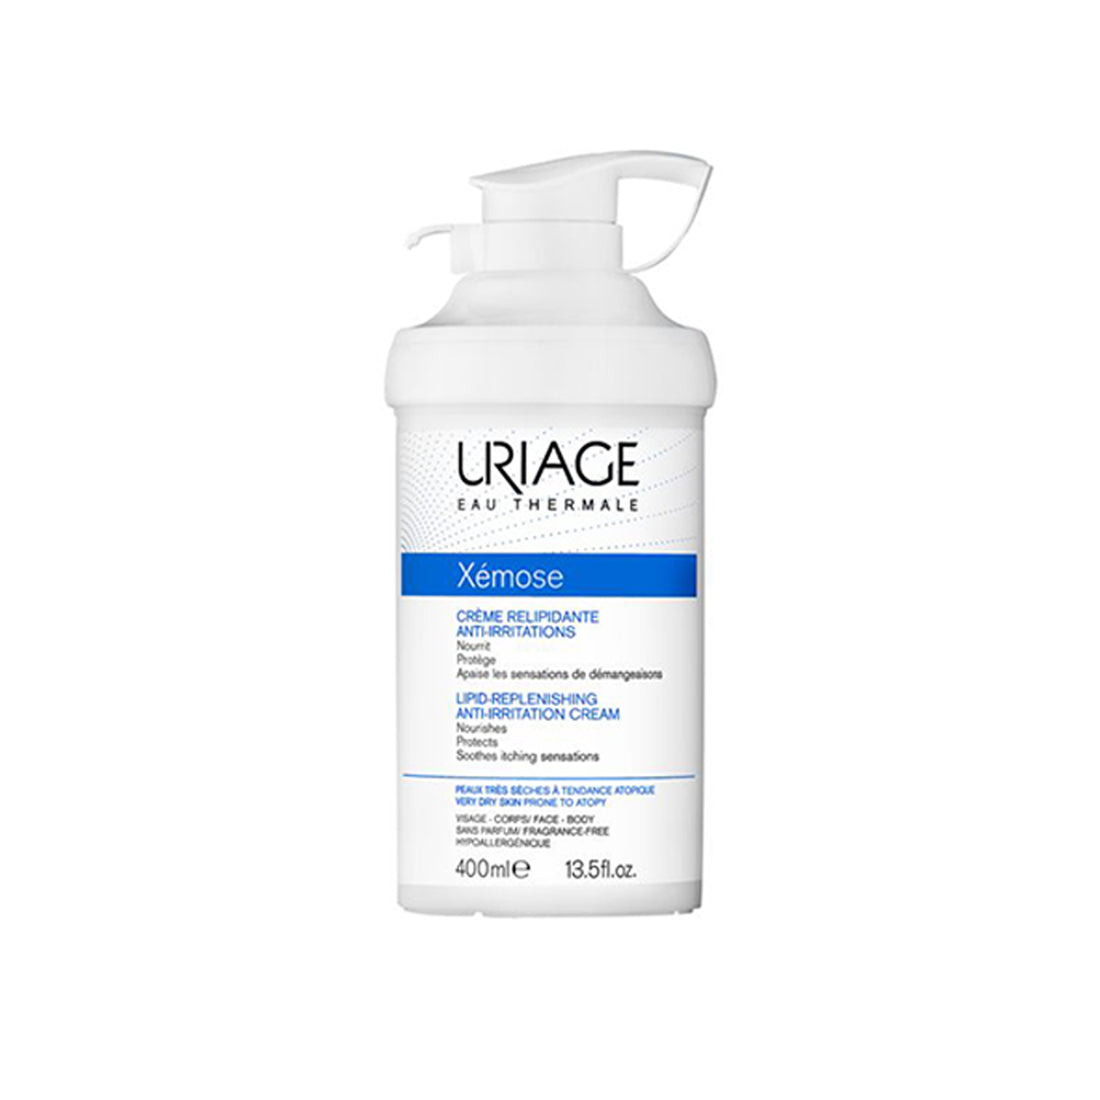 Uriage Xémose Lipid-Replenishing Anti-Irritation Cream 400ml (13.53fl oz)